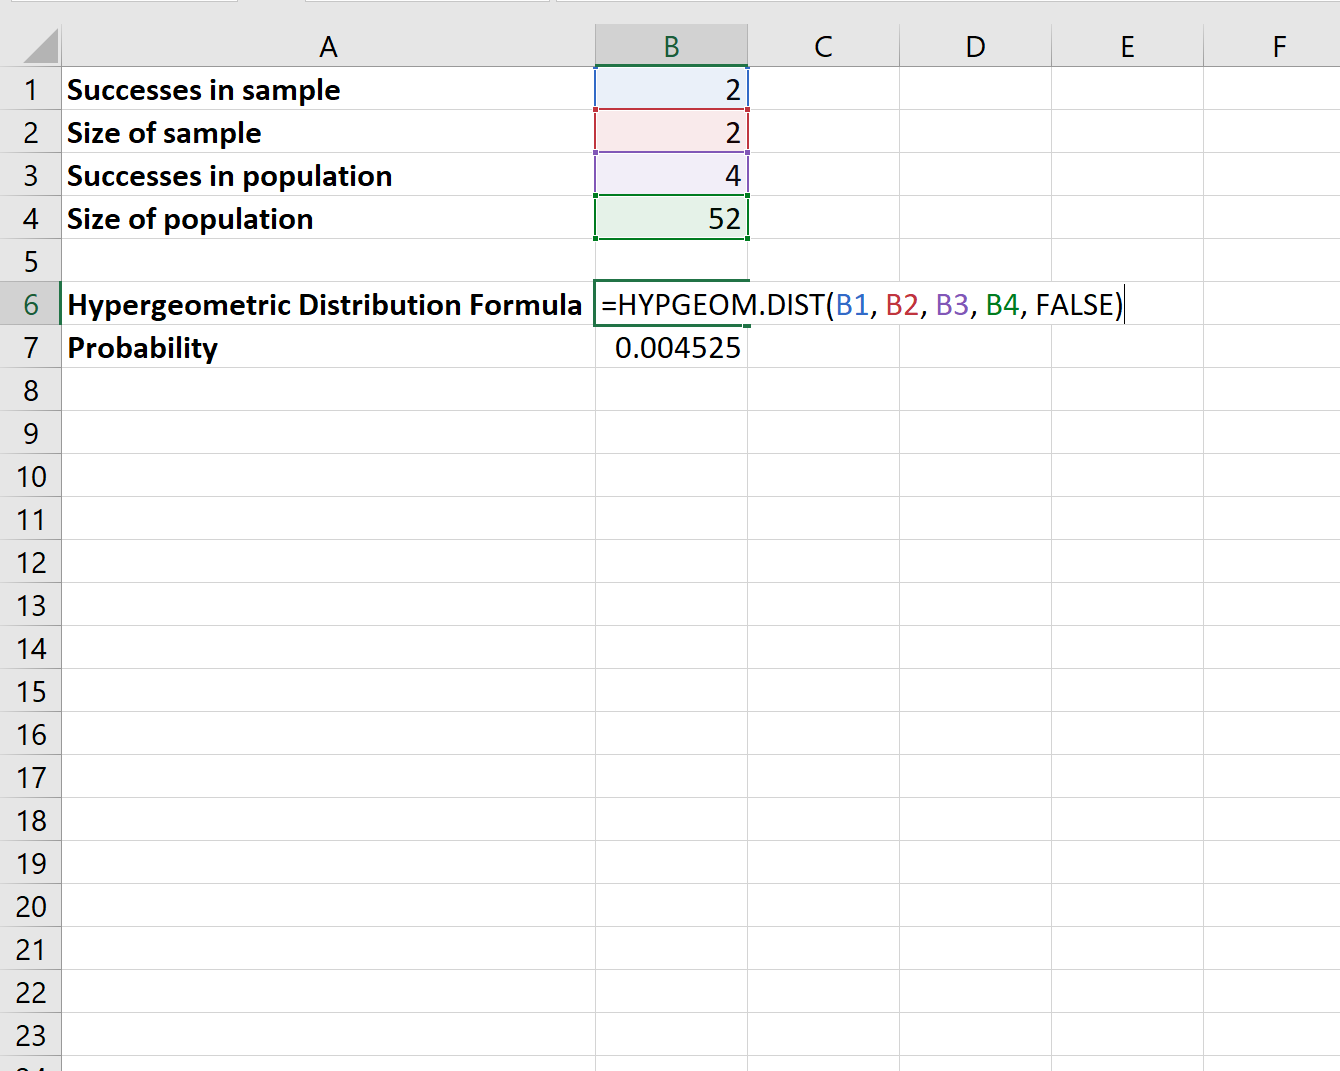 Excel での超幾何分布